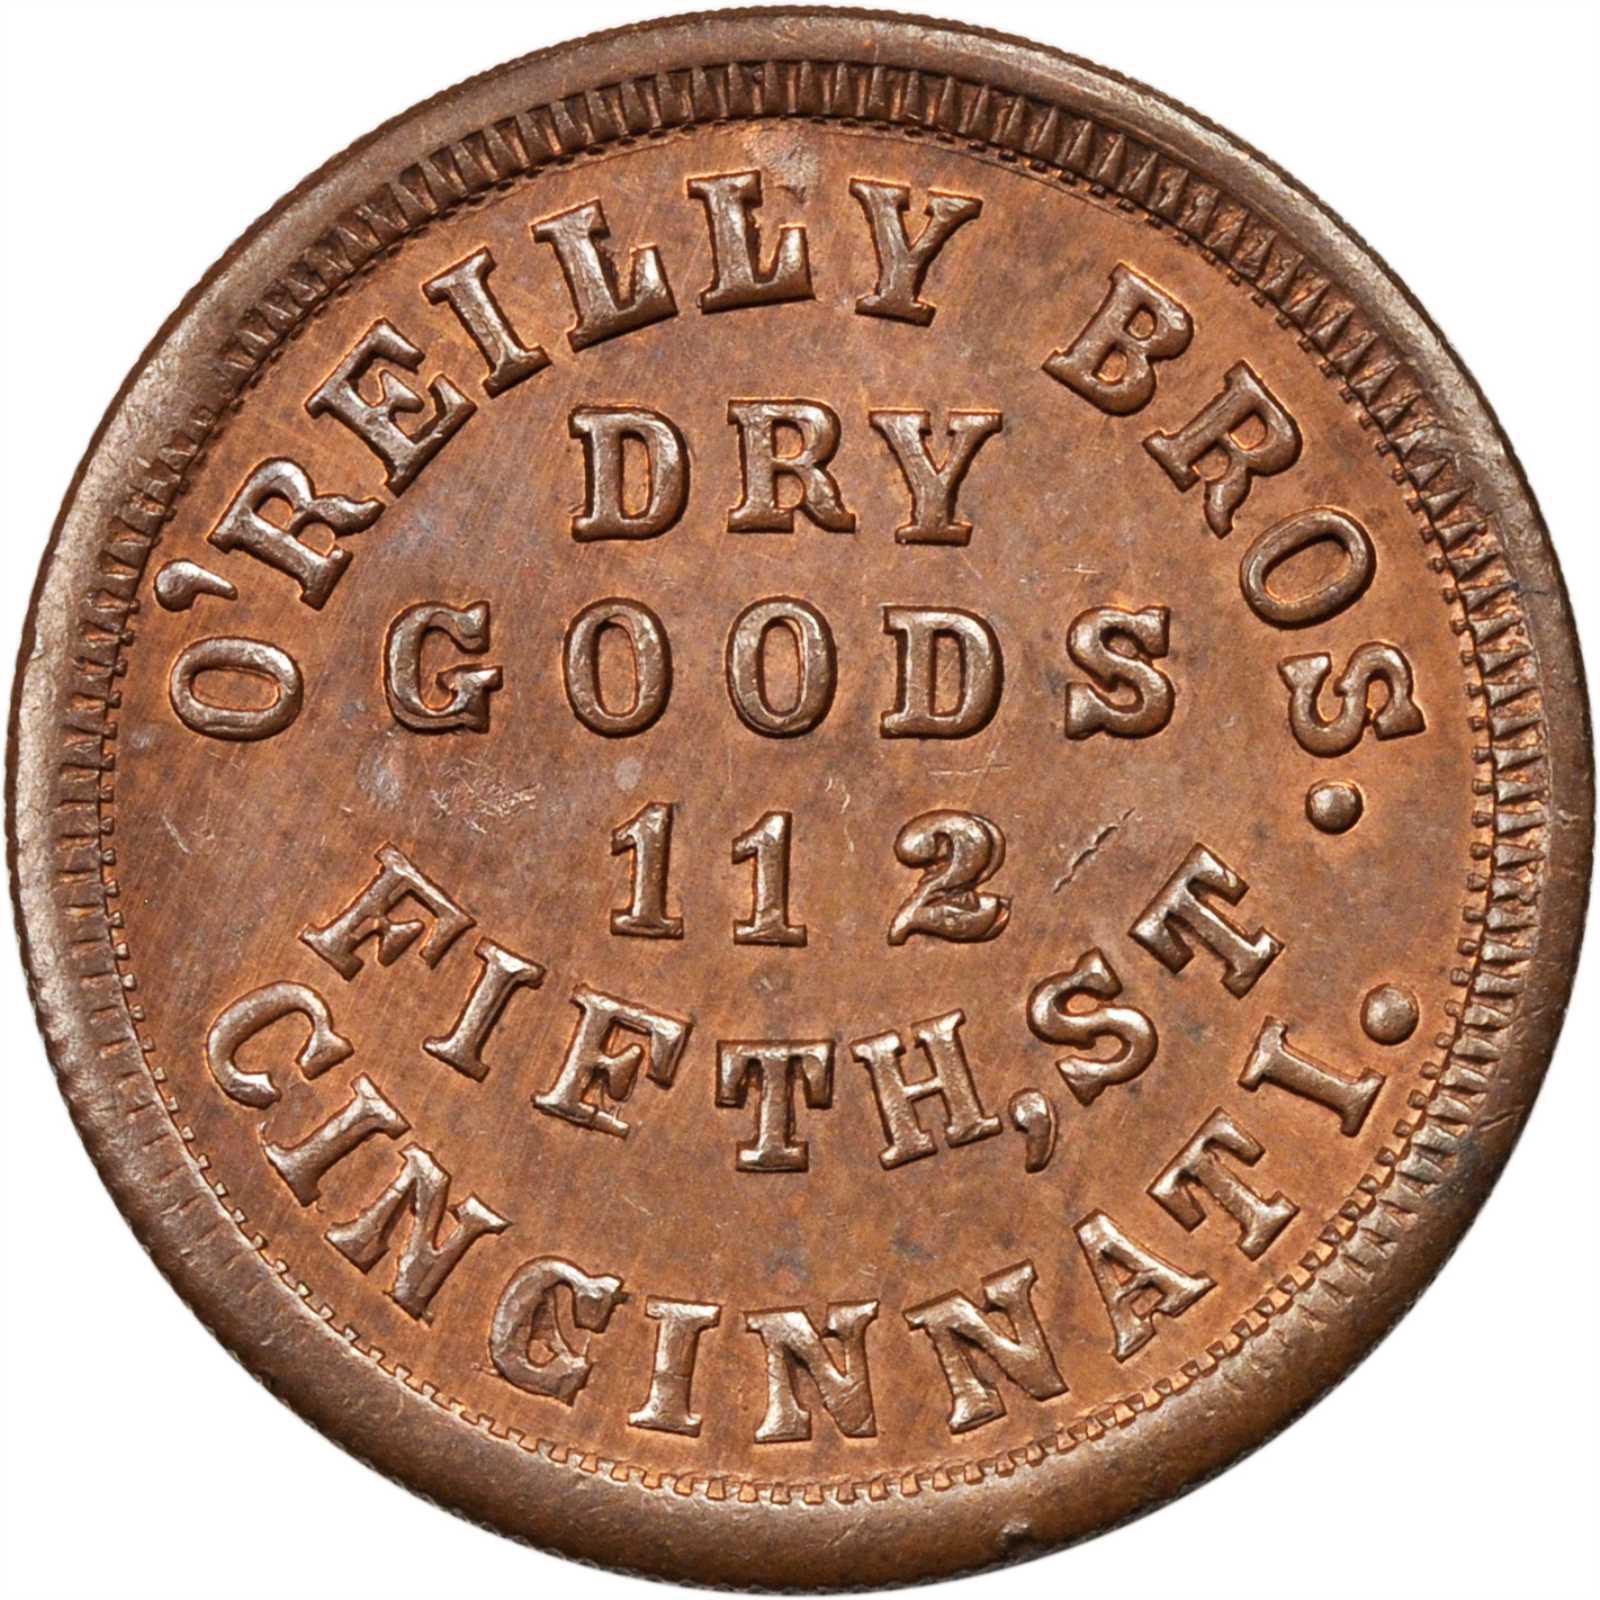 1863-o-reilly-bros-goods-token-sell-appraise-token-buyers